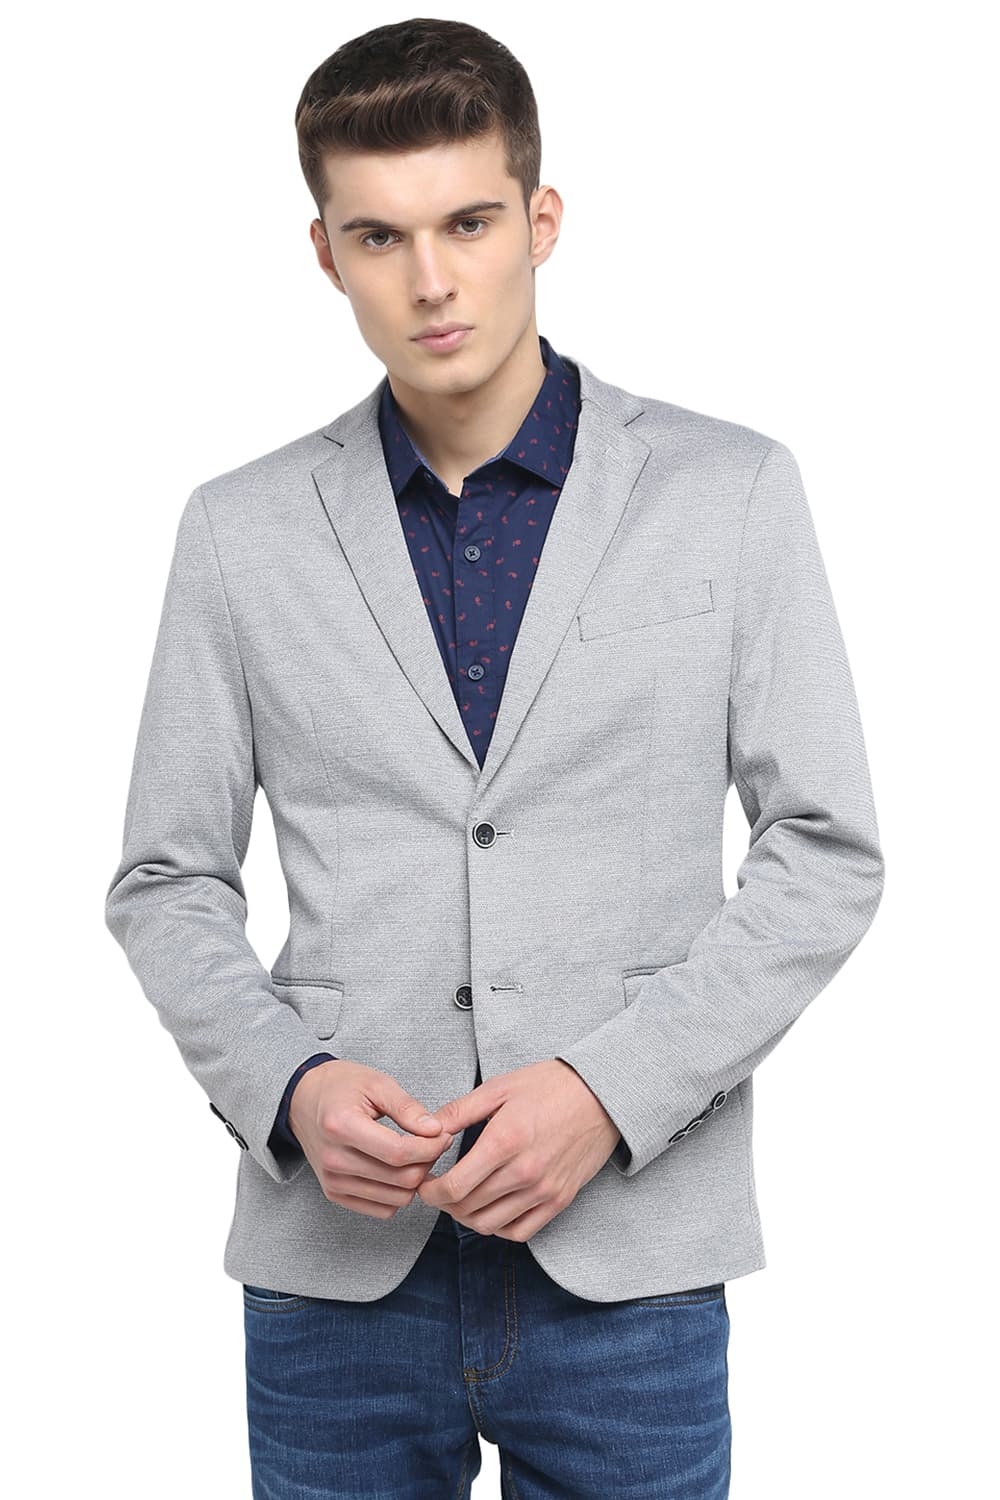 BASICS | Basics Comfort Fit Flint Grey 2 Button Knit Blazer